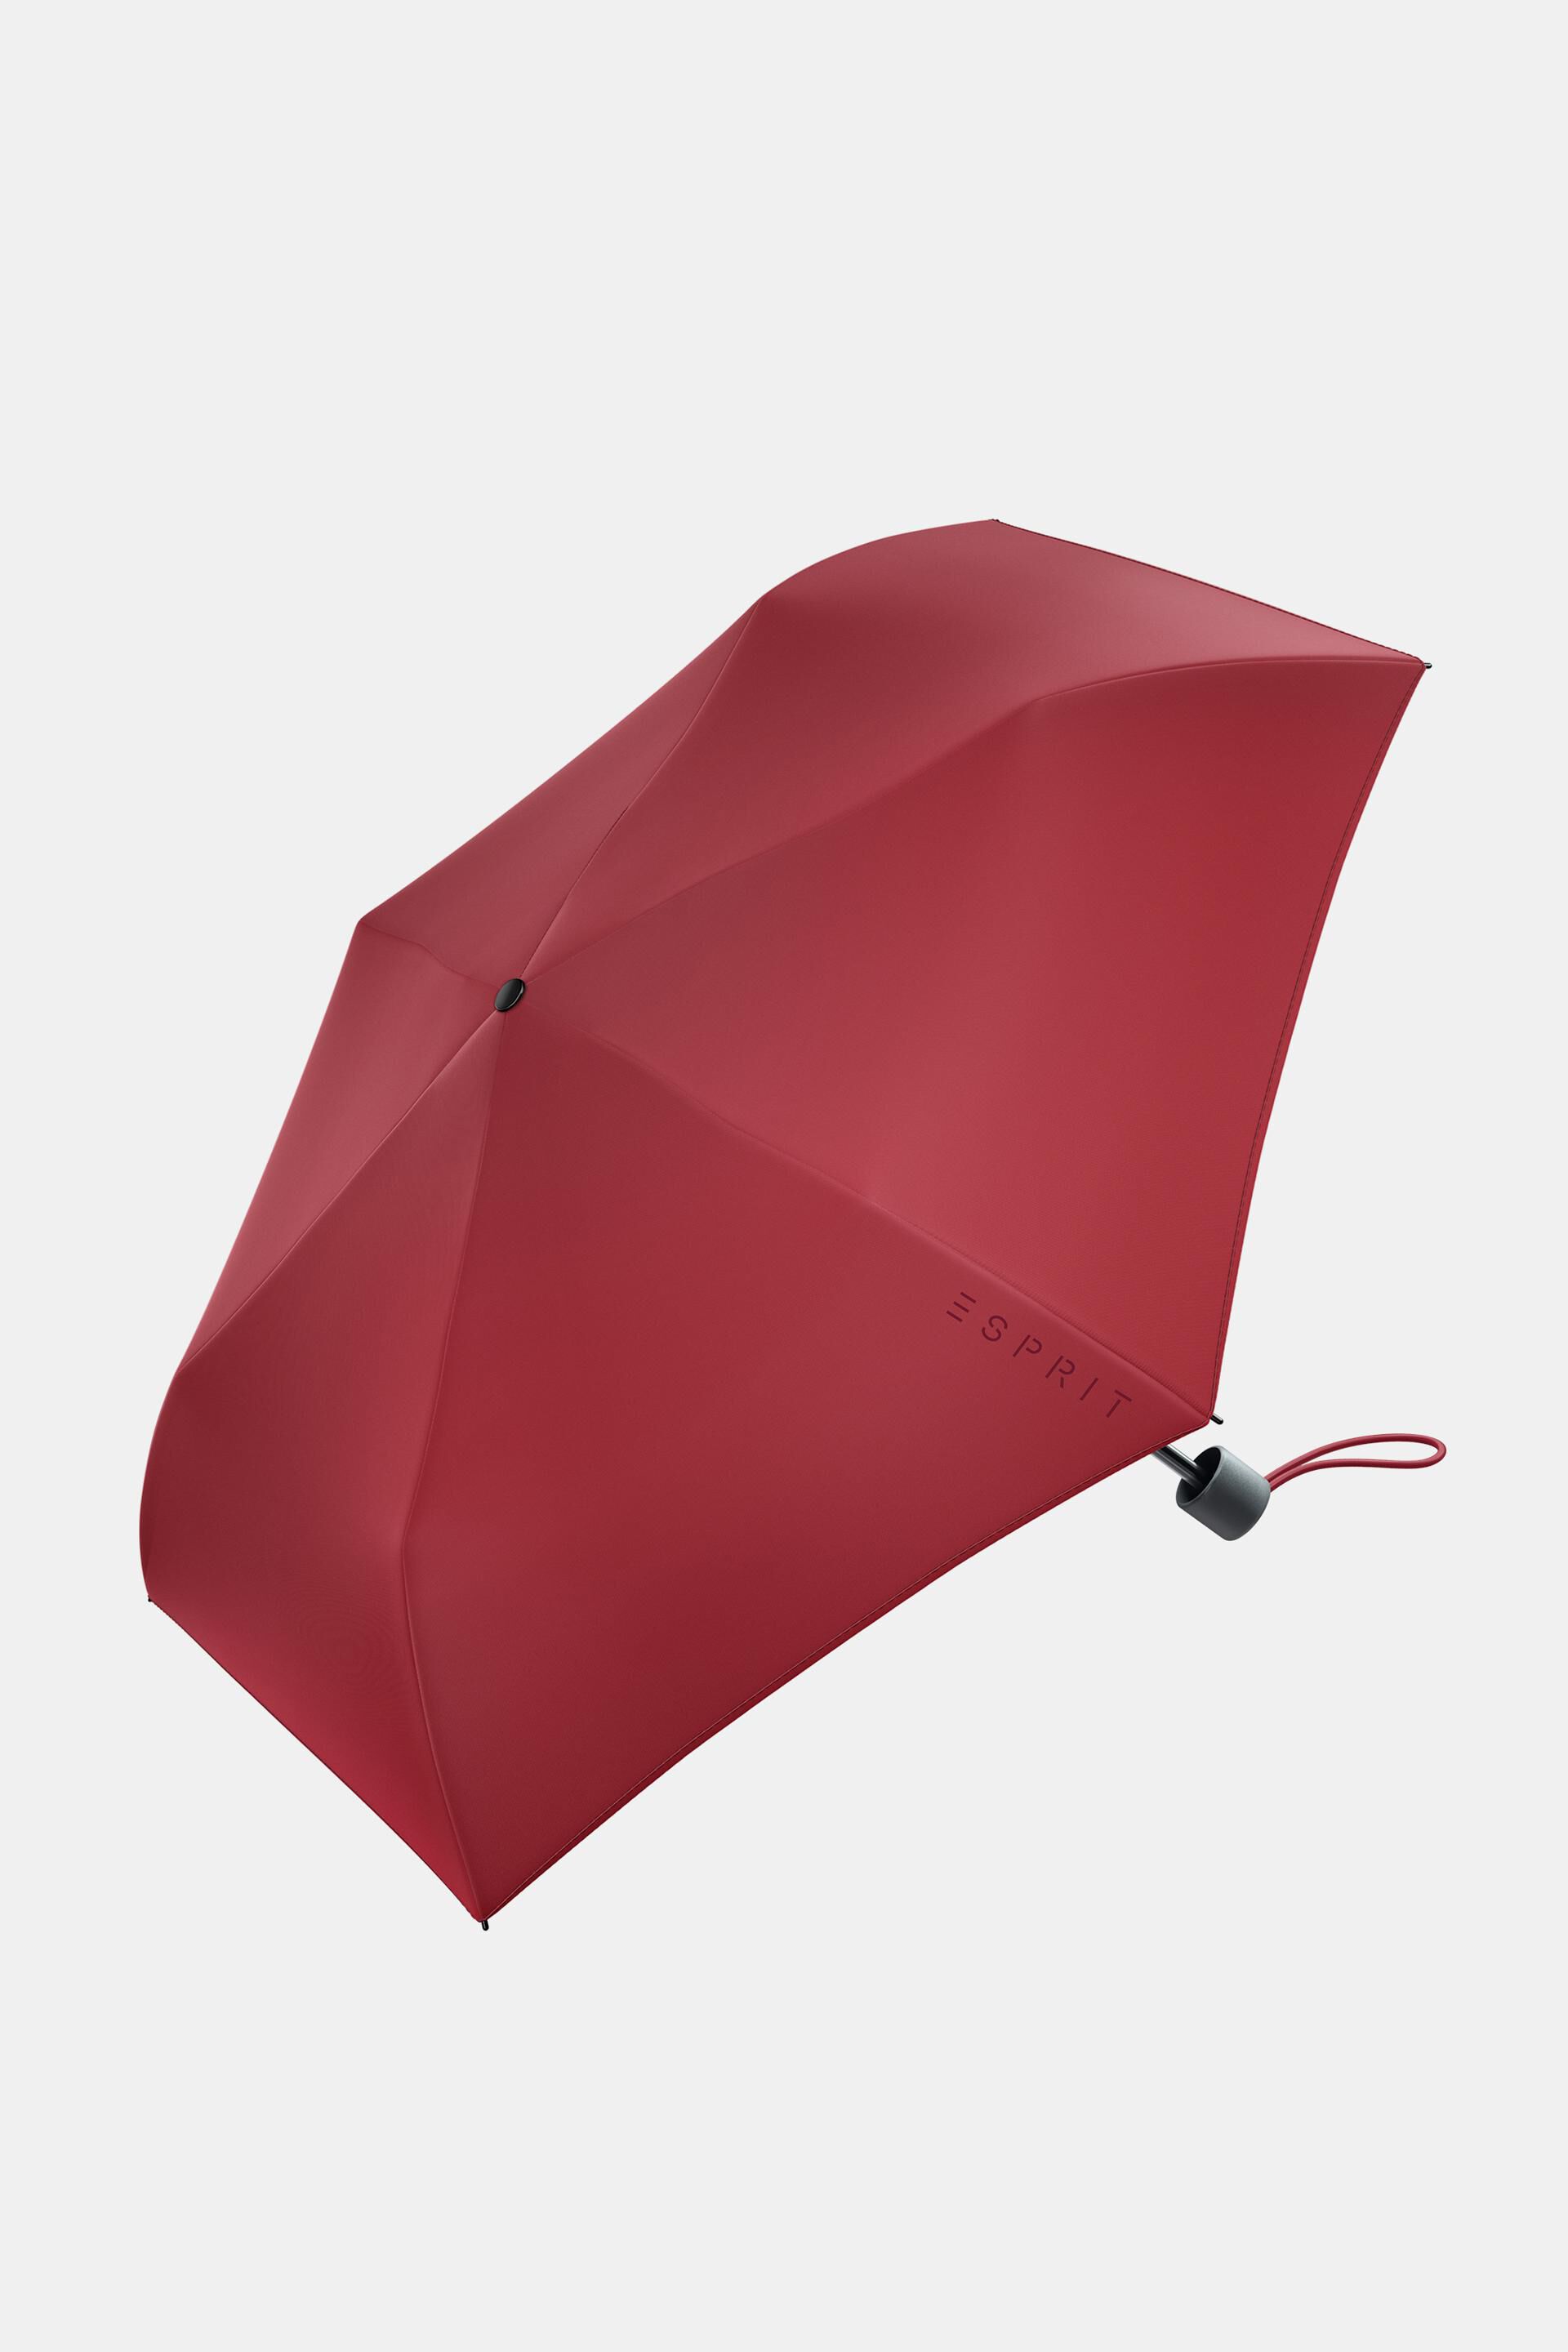 Esprit Online Store Pocket umbrella in red with logo print